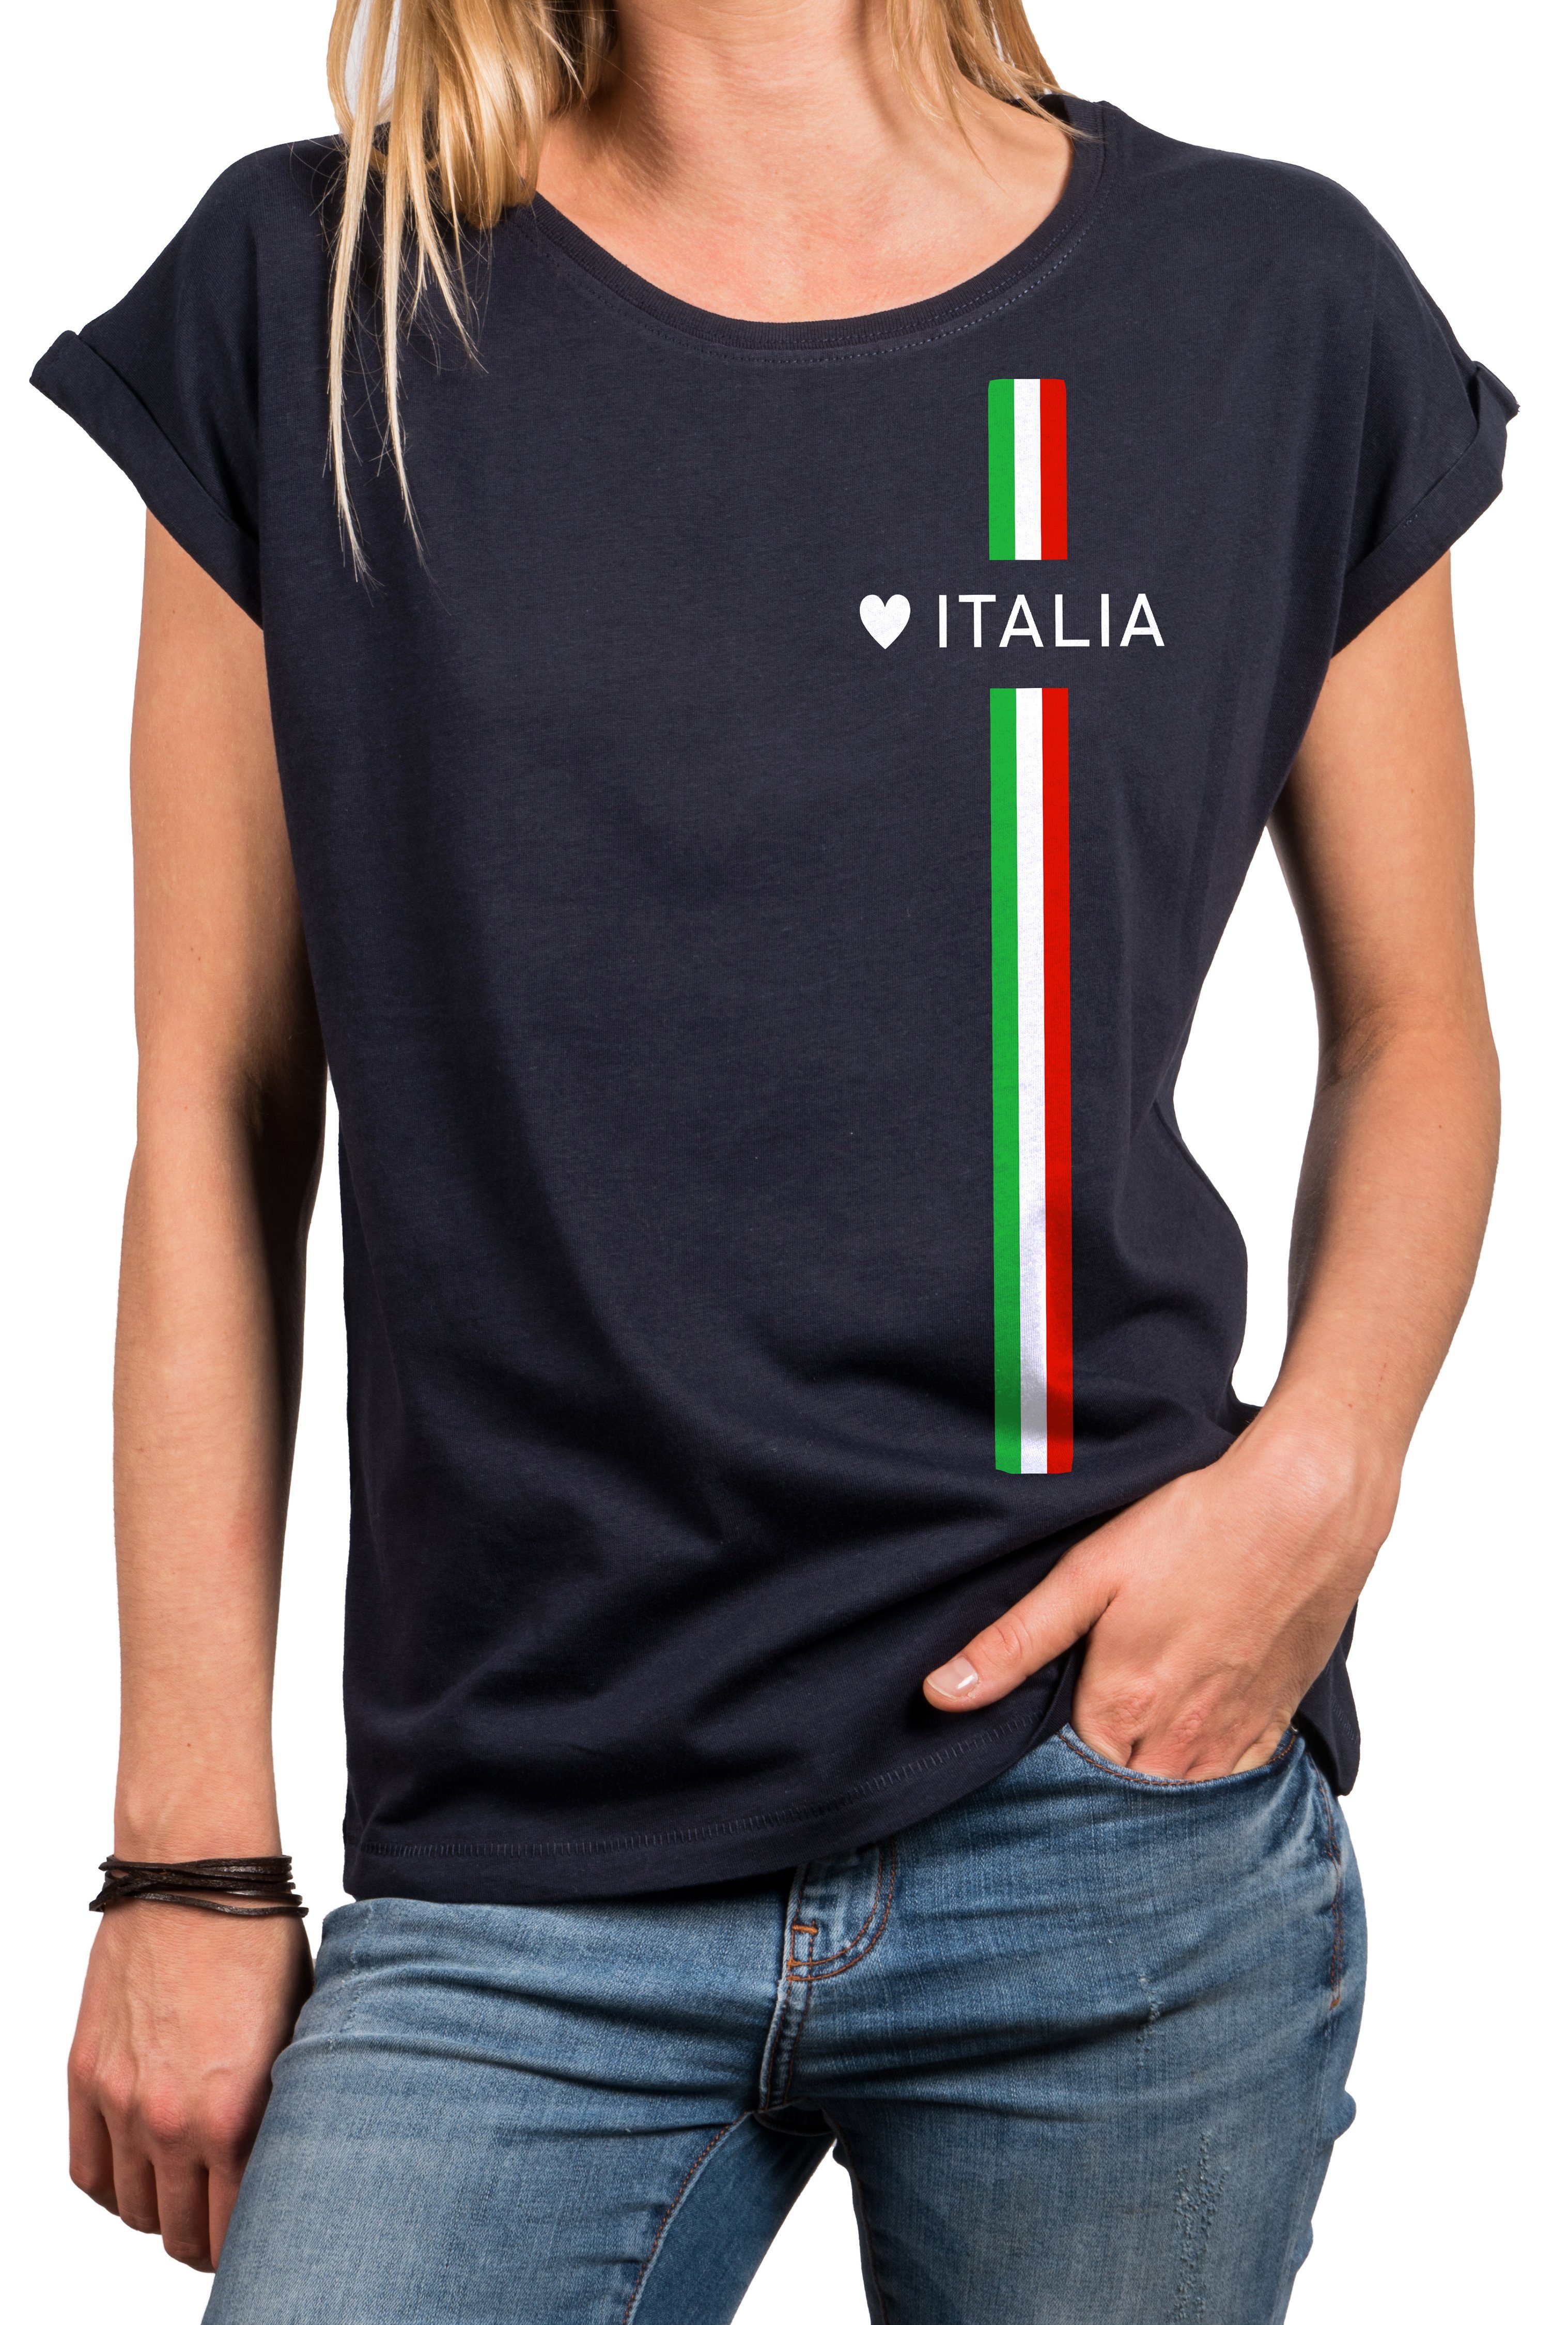 MAKAYA Print-Shirt Damen Italienische Mode Style Top Italiano Kurzarmshirt, Trikot Blau Herz Italia Druck mit Italien